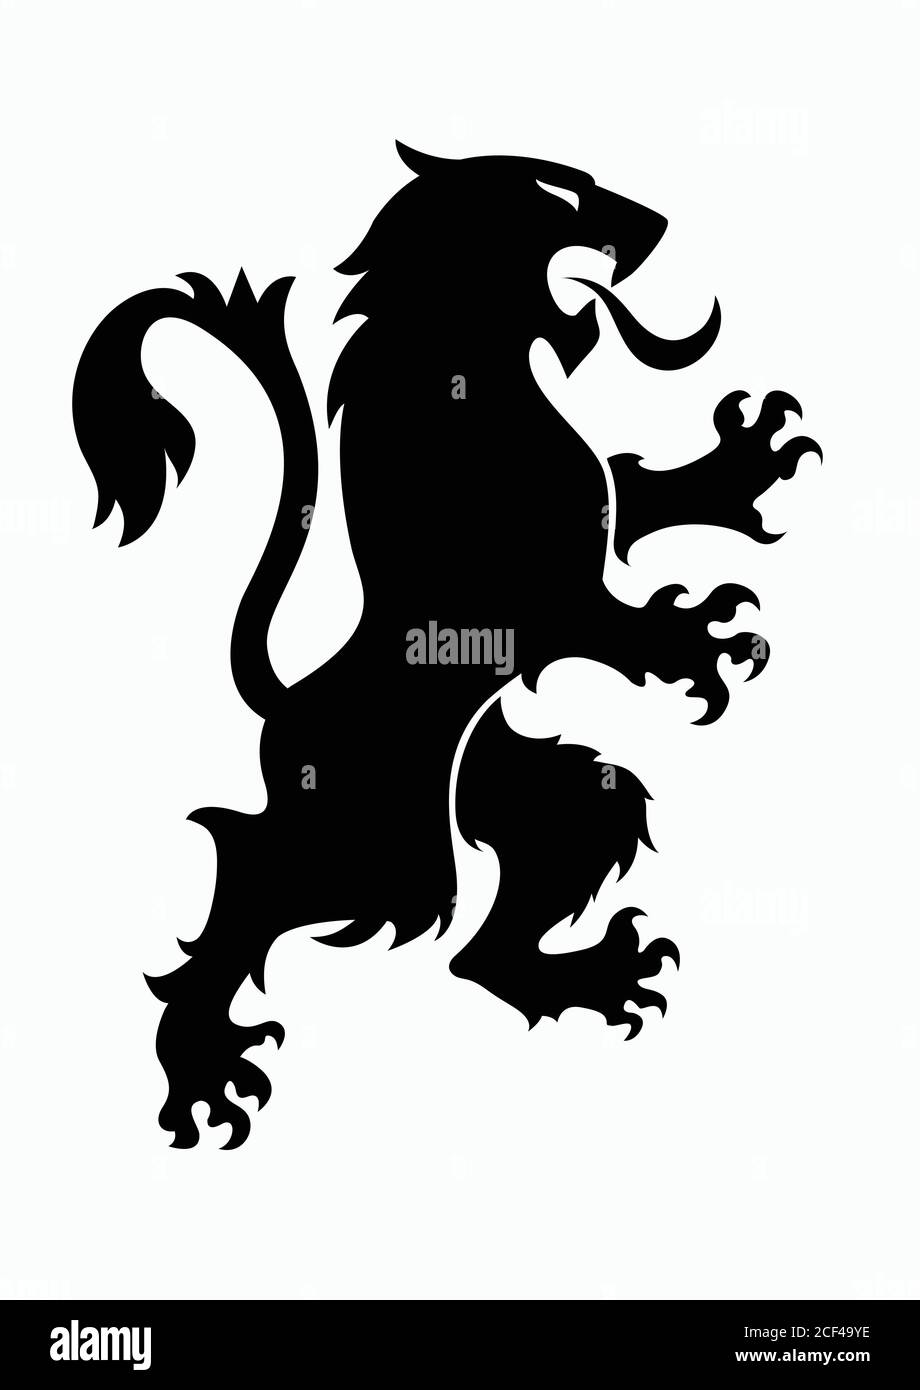 Heraldic rampant lion black silhouette. Coat of arms. Heraldry logo design element. Stock Vector